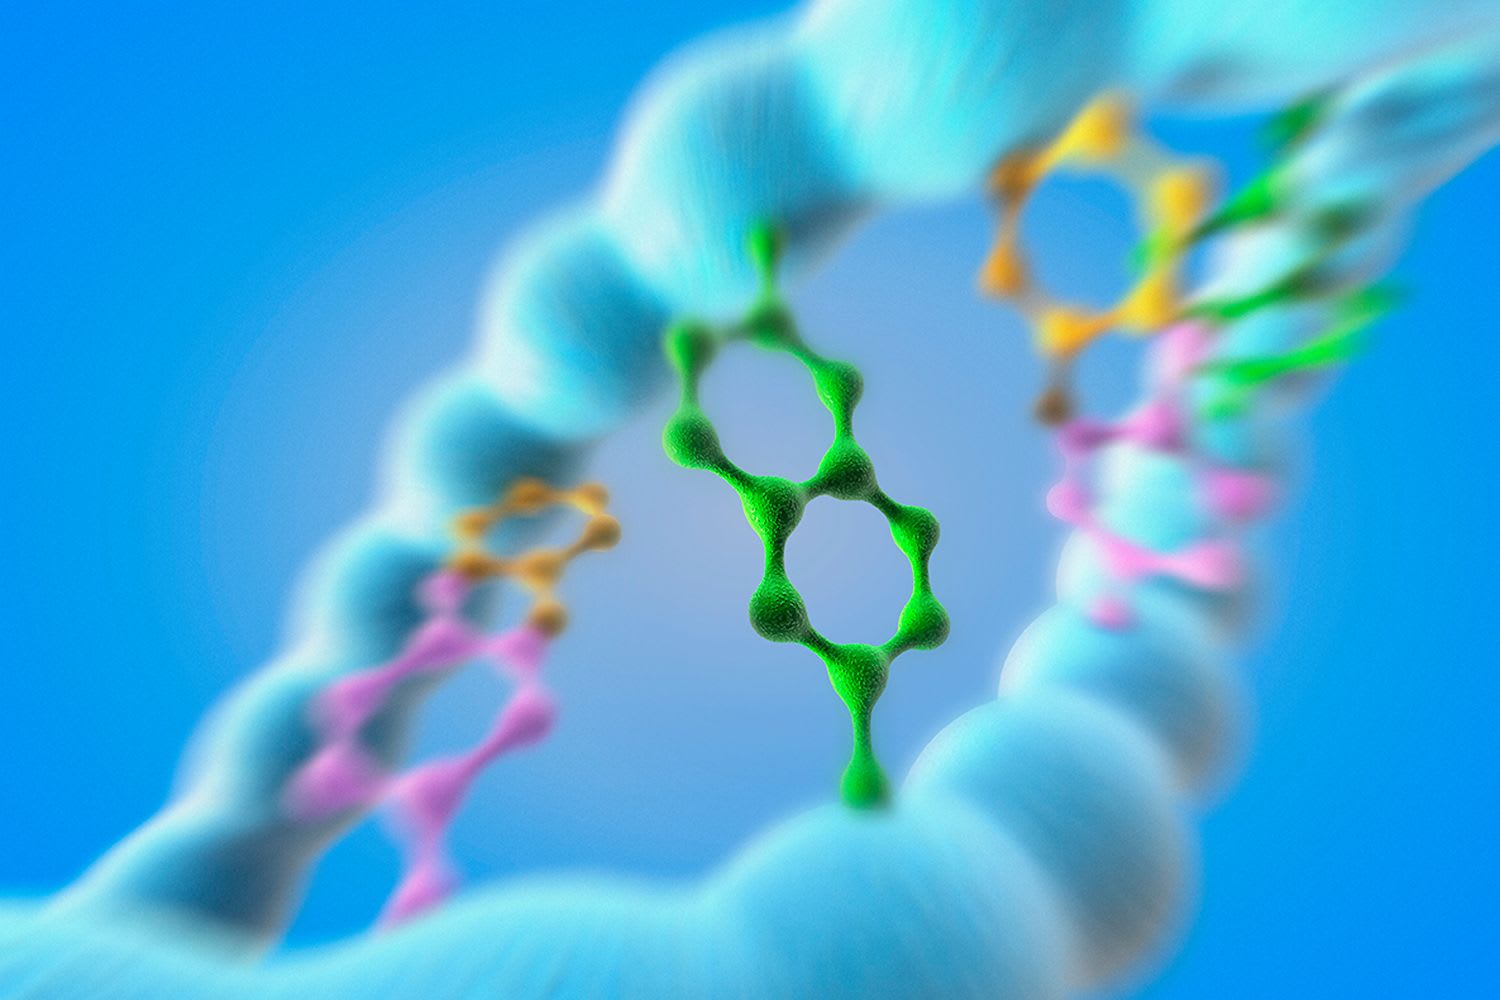 Digital art showing strand of DNA in blue, green, orange and pink